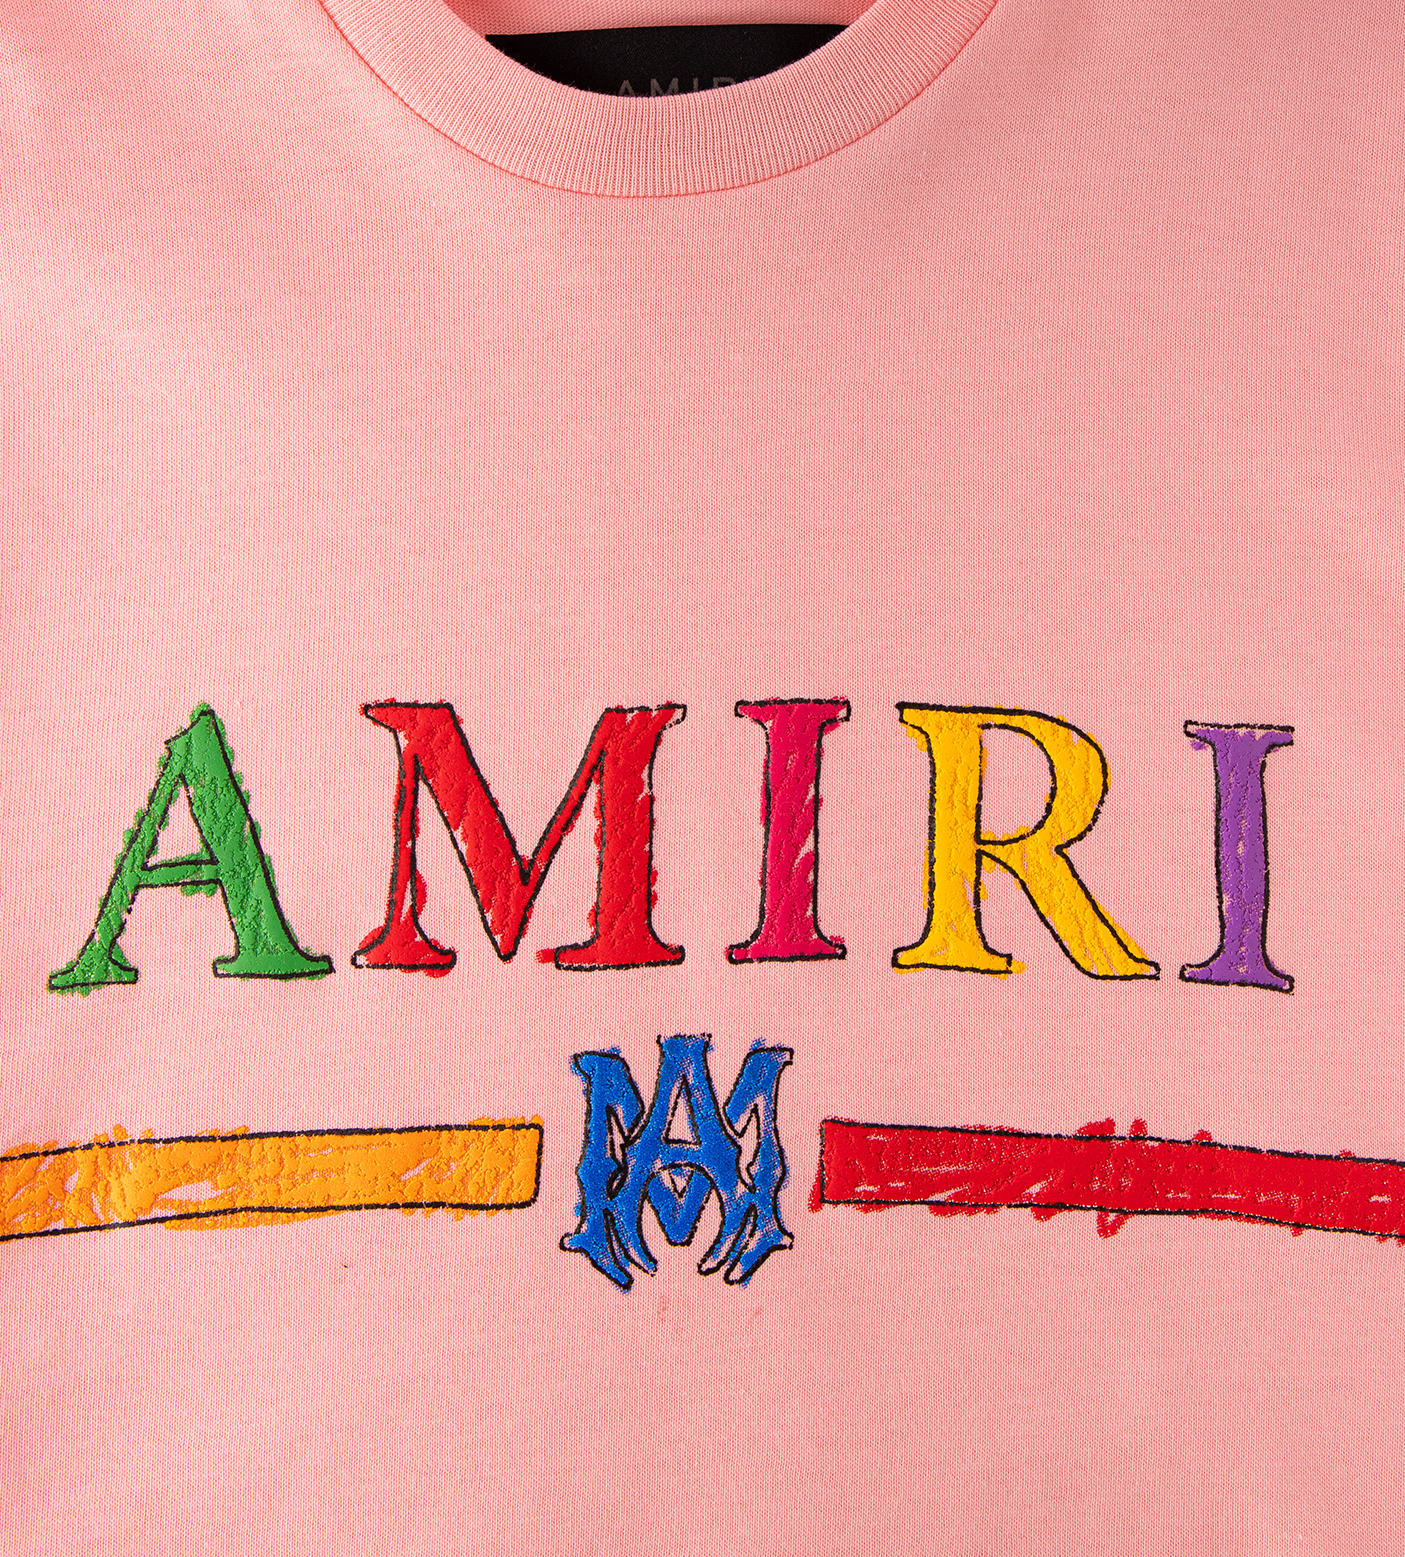 logo-print cotton T-shirt, AMIRI KIDS